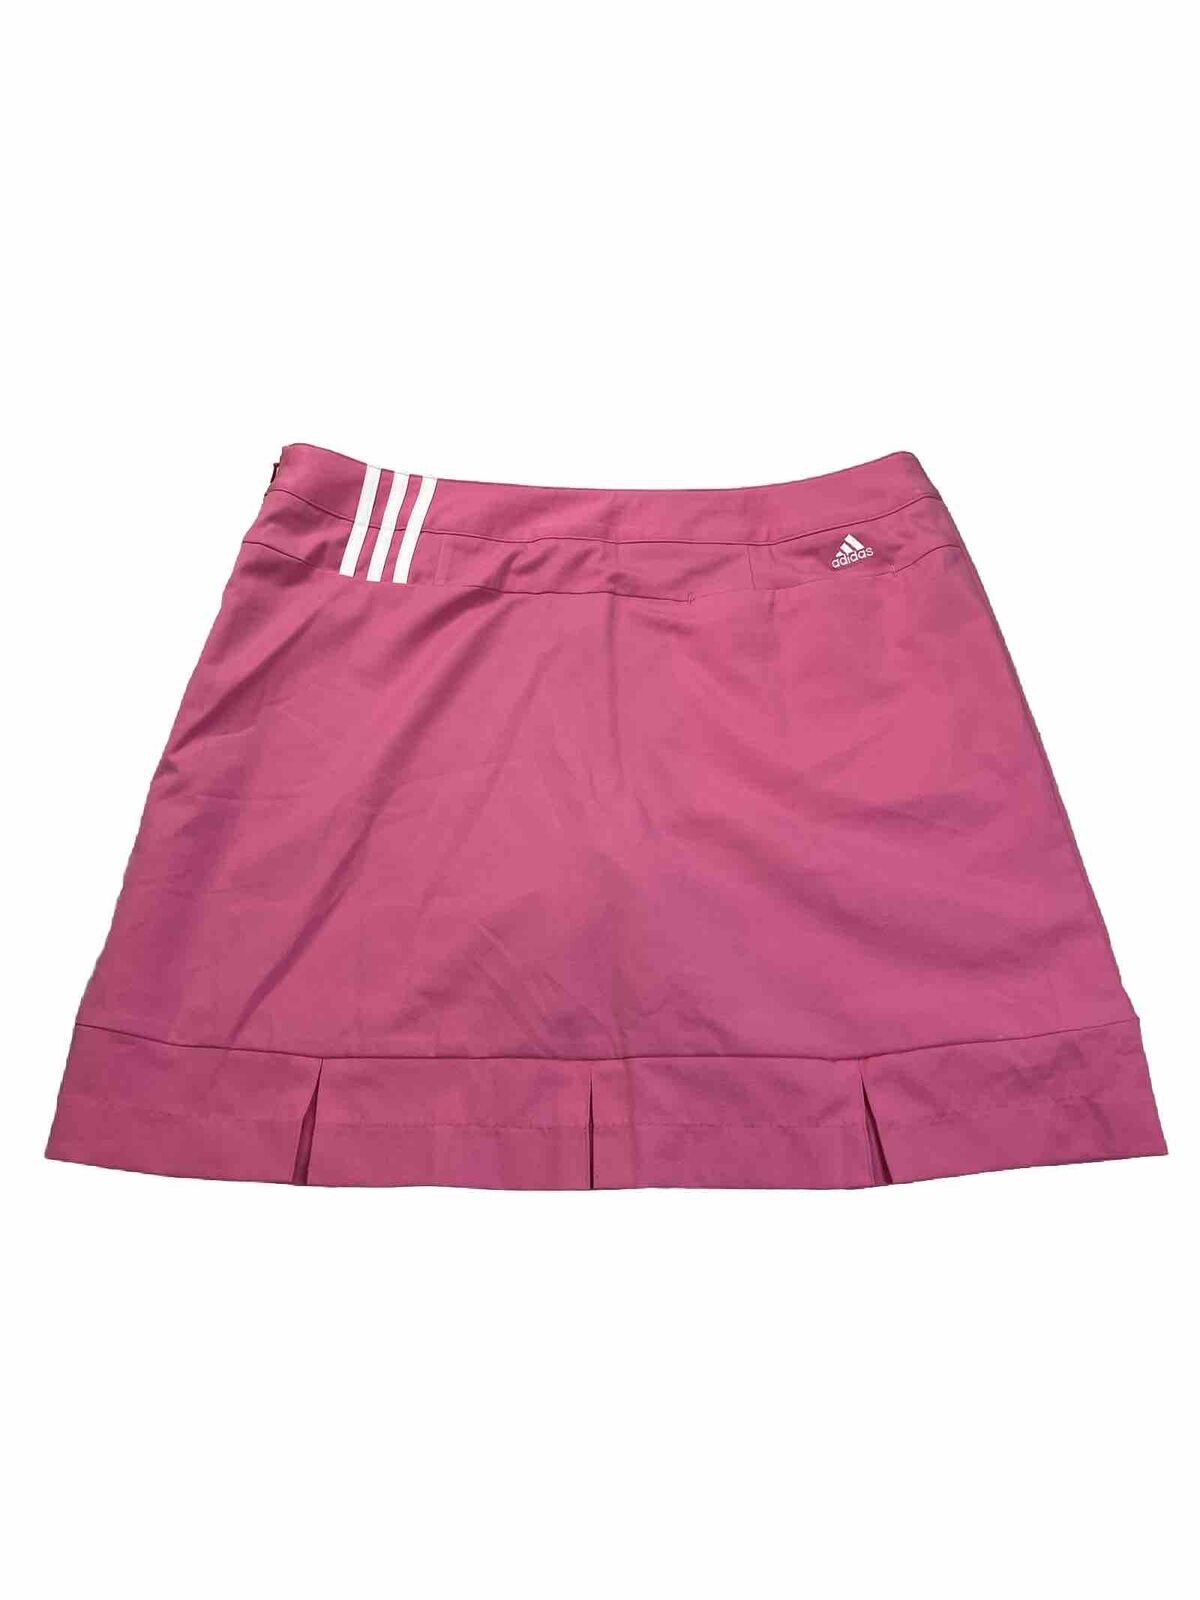 Adidas Women's Pink Climacool Lined Golf Skort - 12